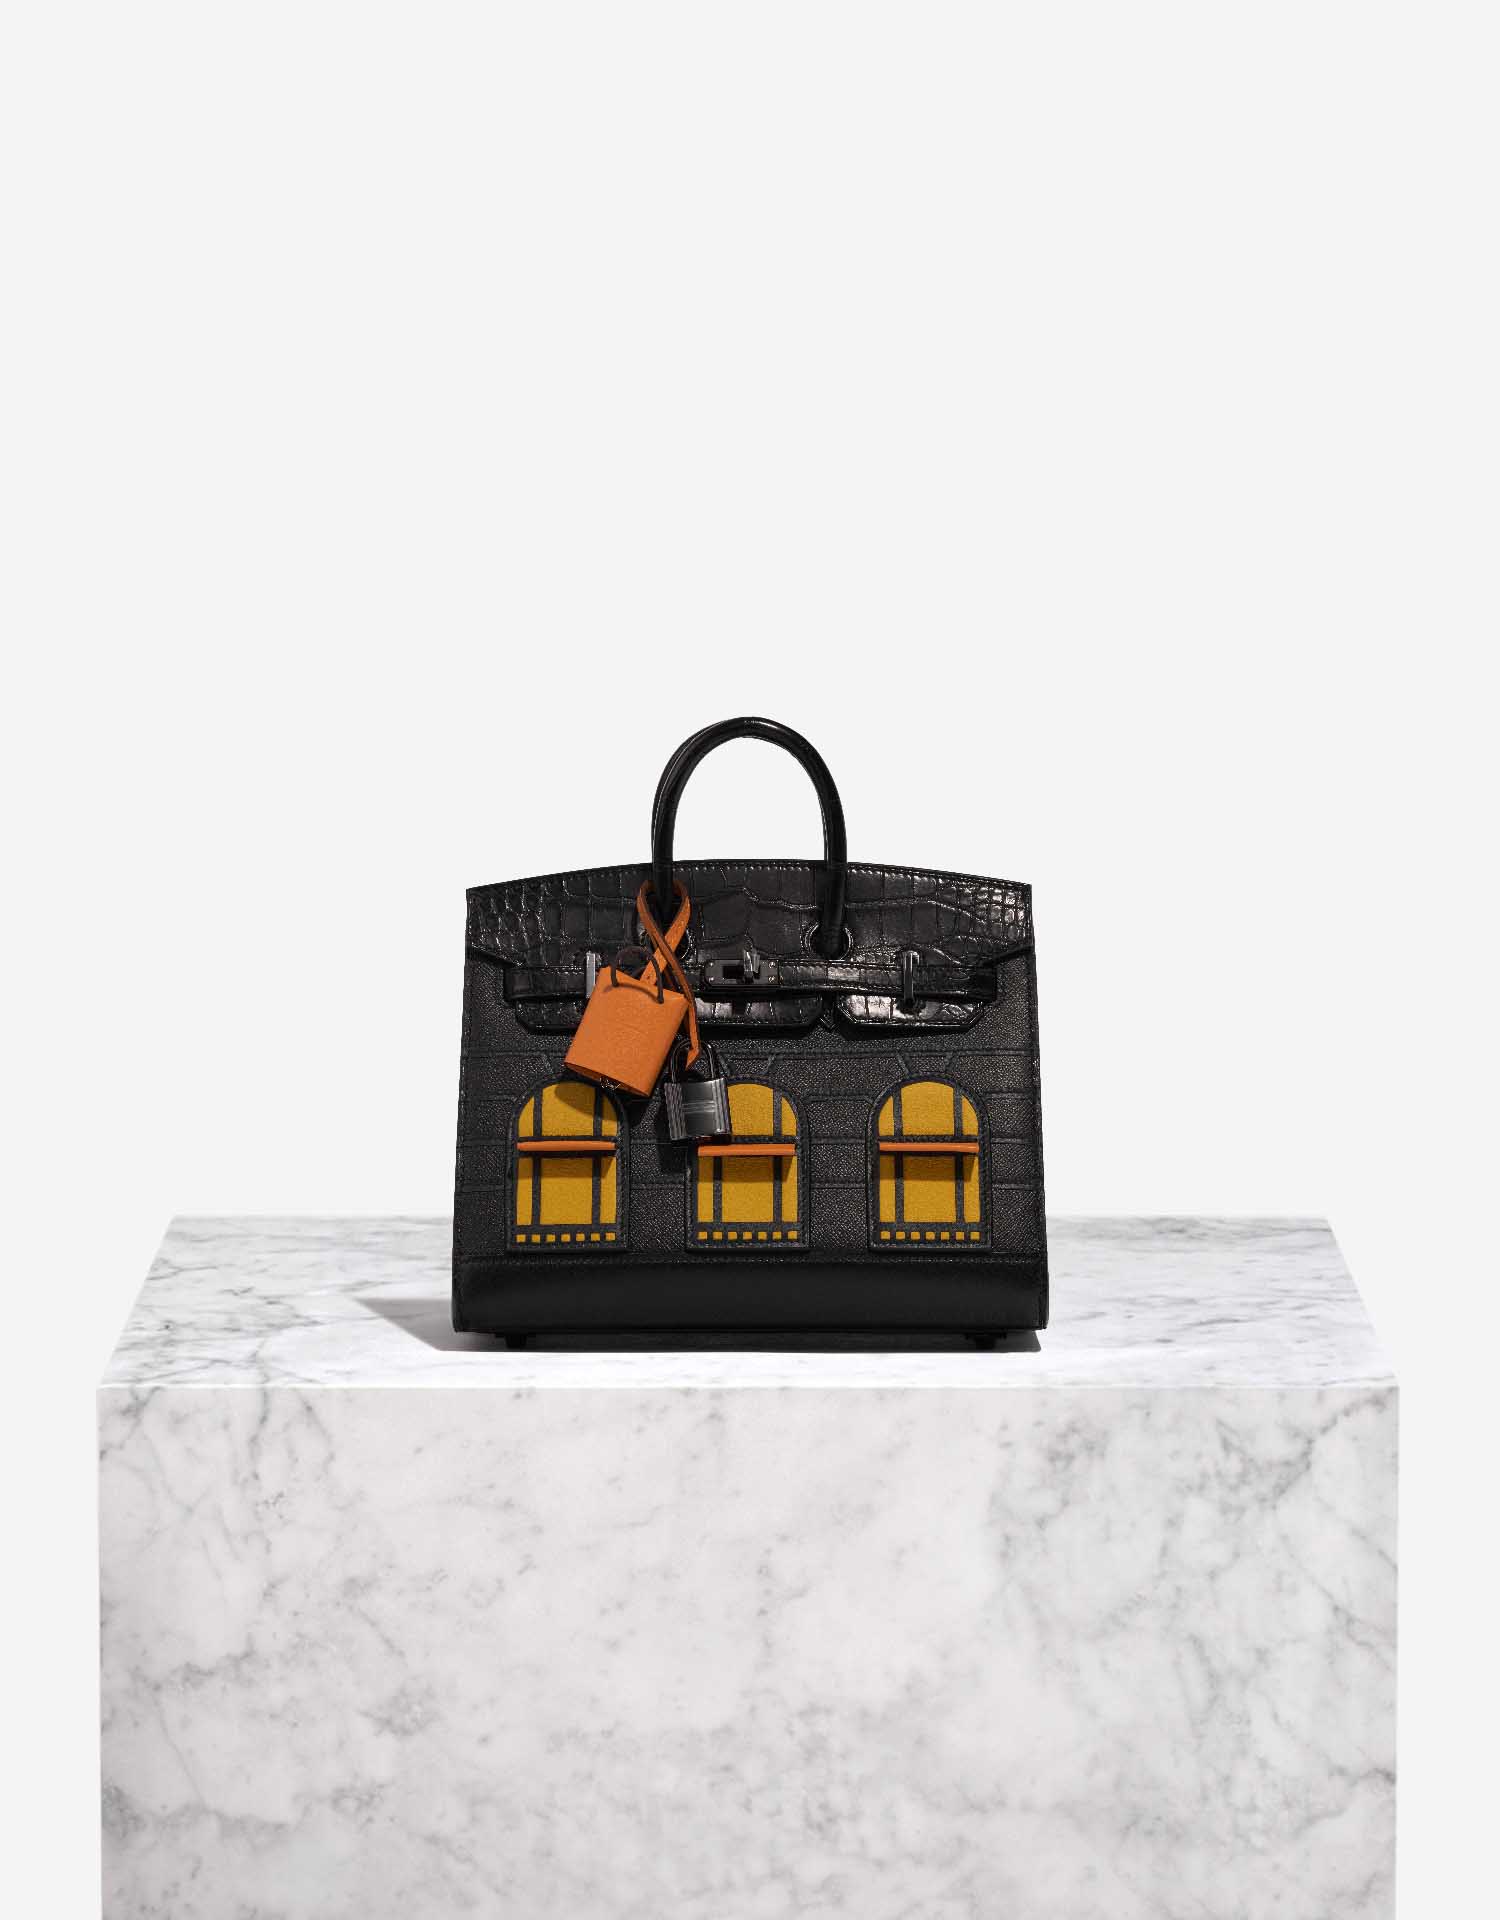 220 000 euros, c'est le prix de cet incroyable sac Birkin d'Hermès incrusté  de diamants